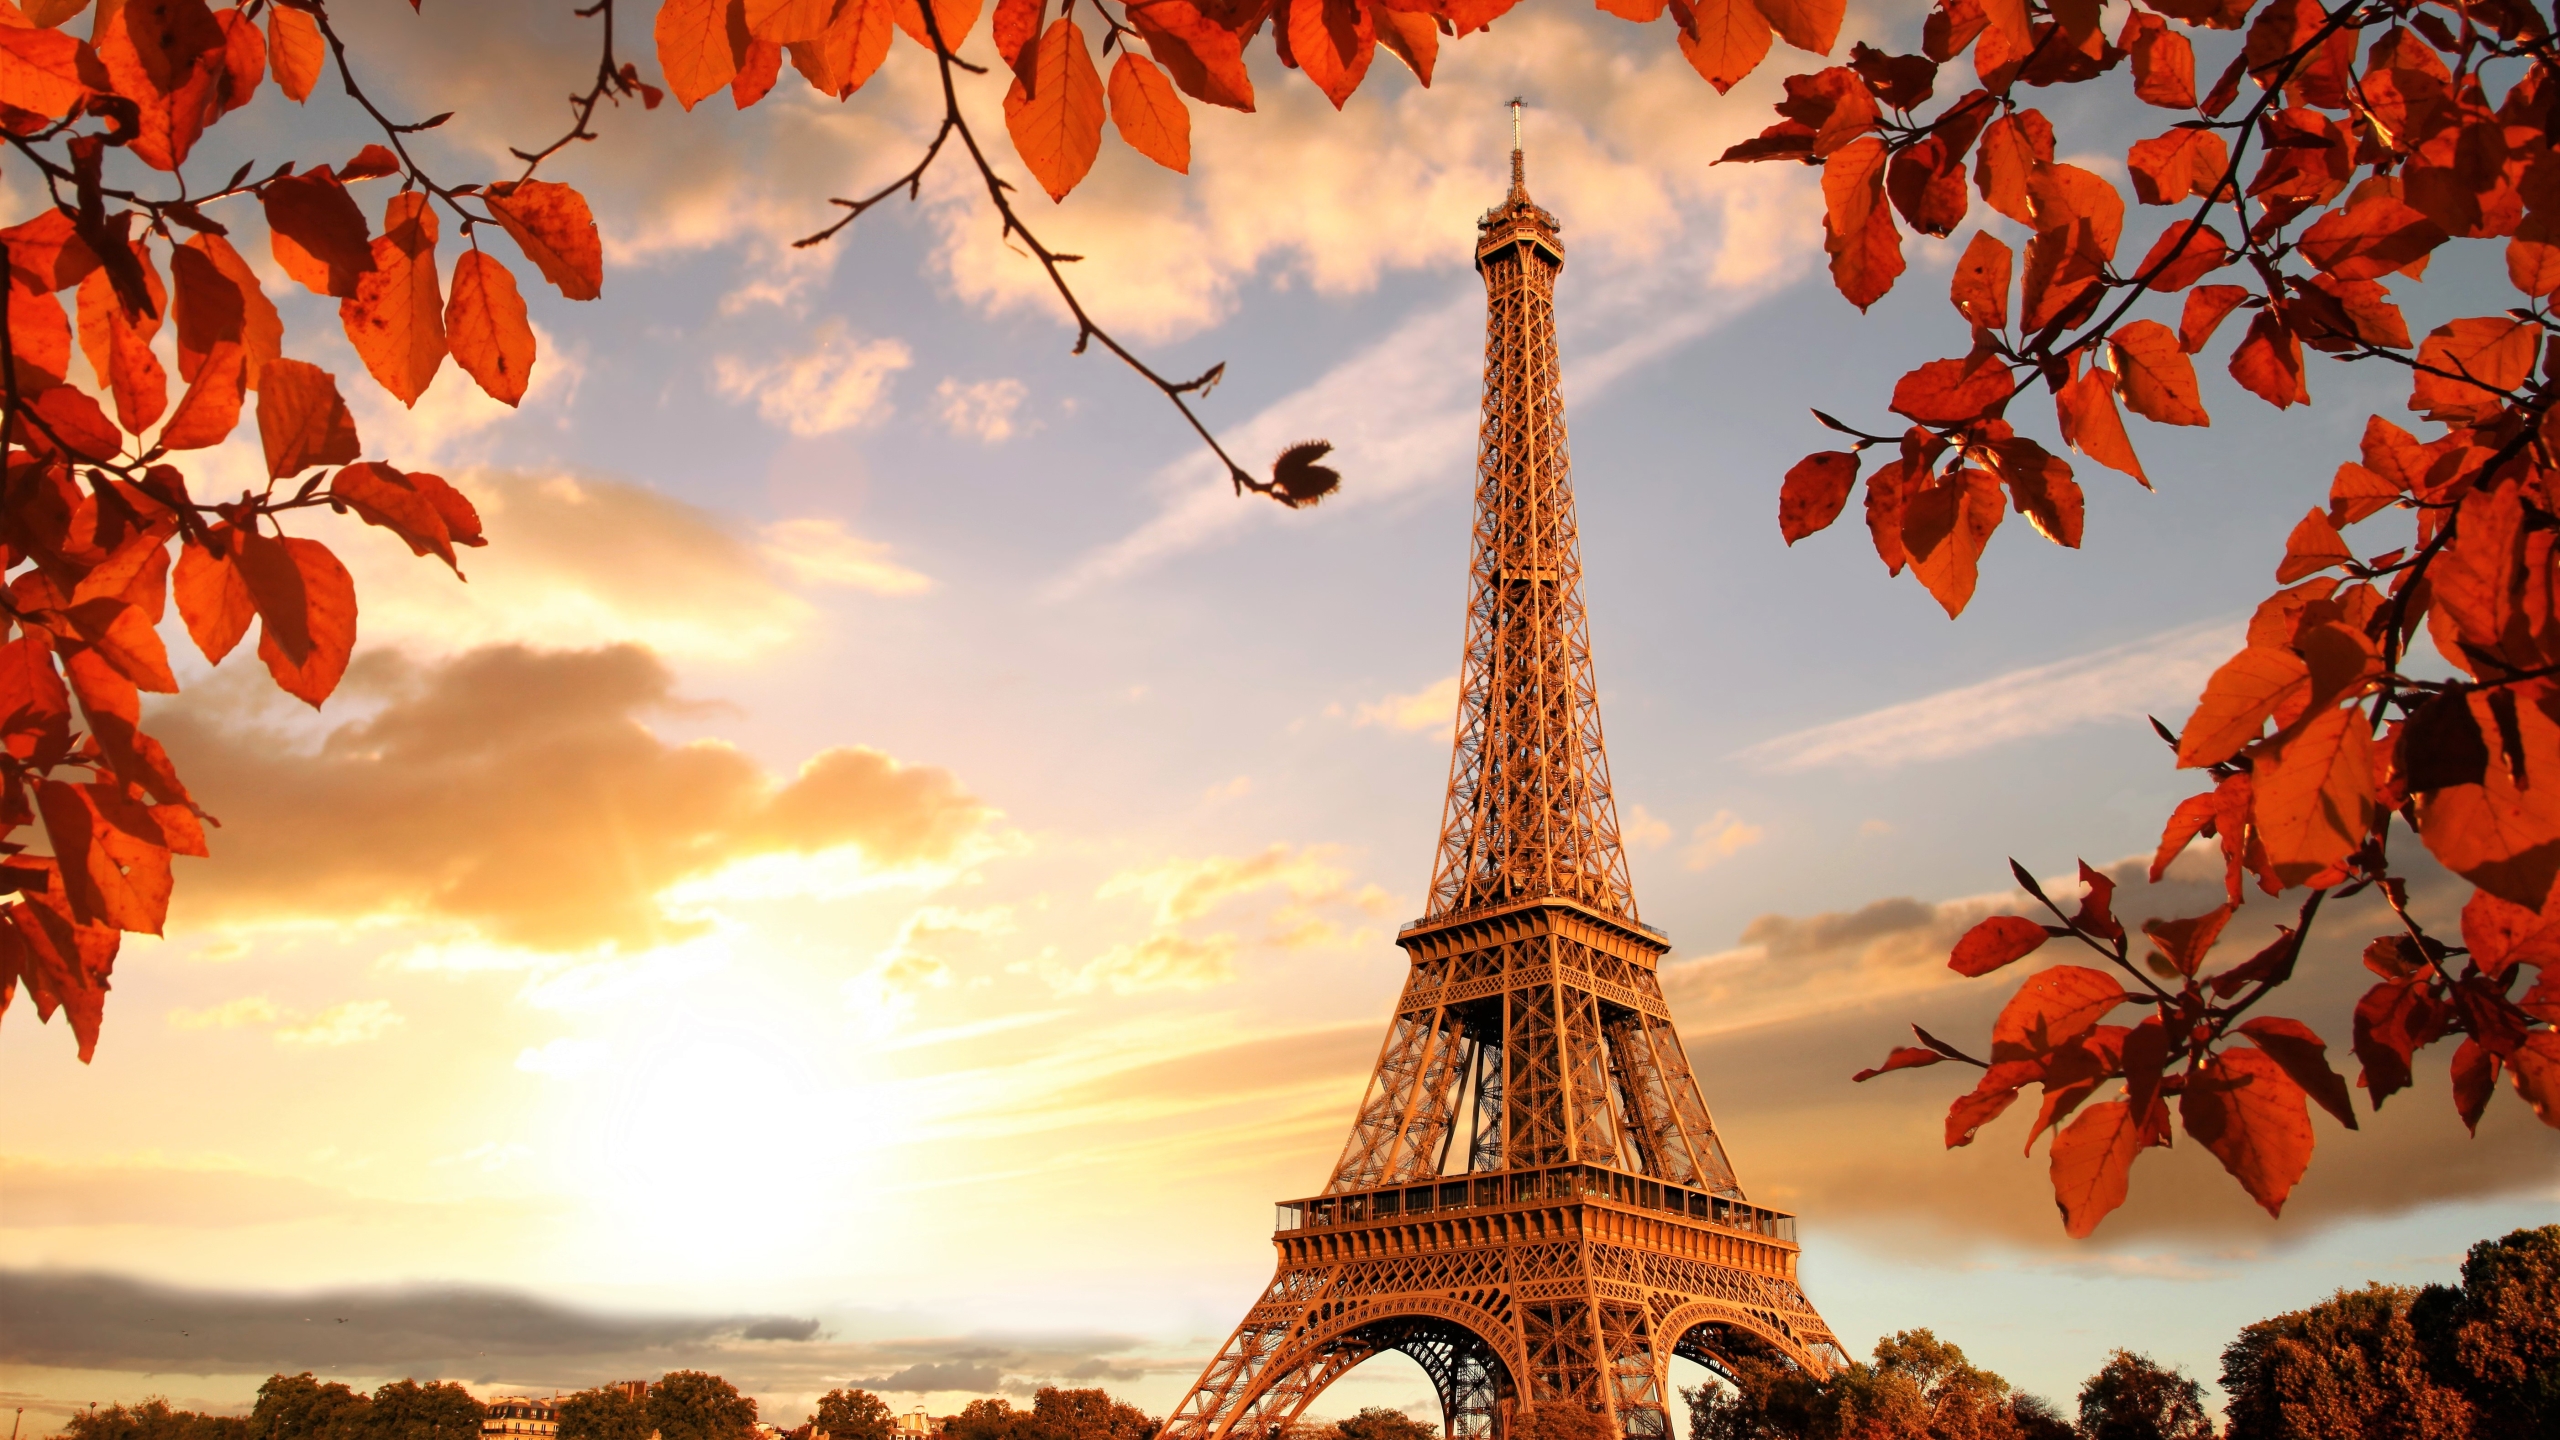 Download Eiffel  Tower  Hd  Wallpaper  1080P  wallpaper  sekolah